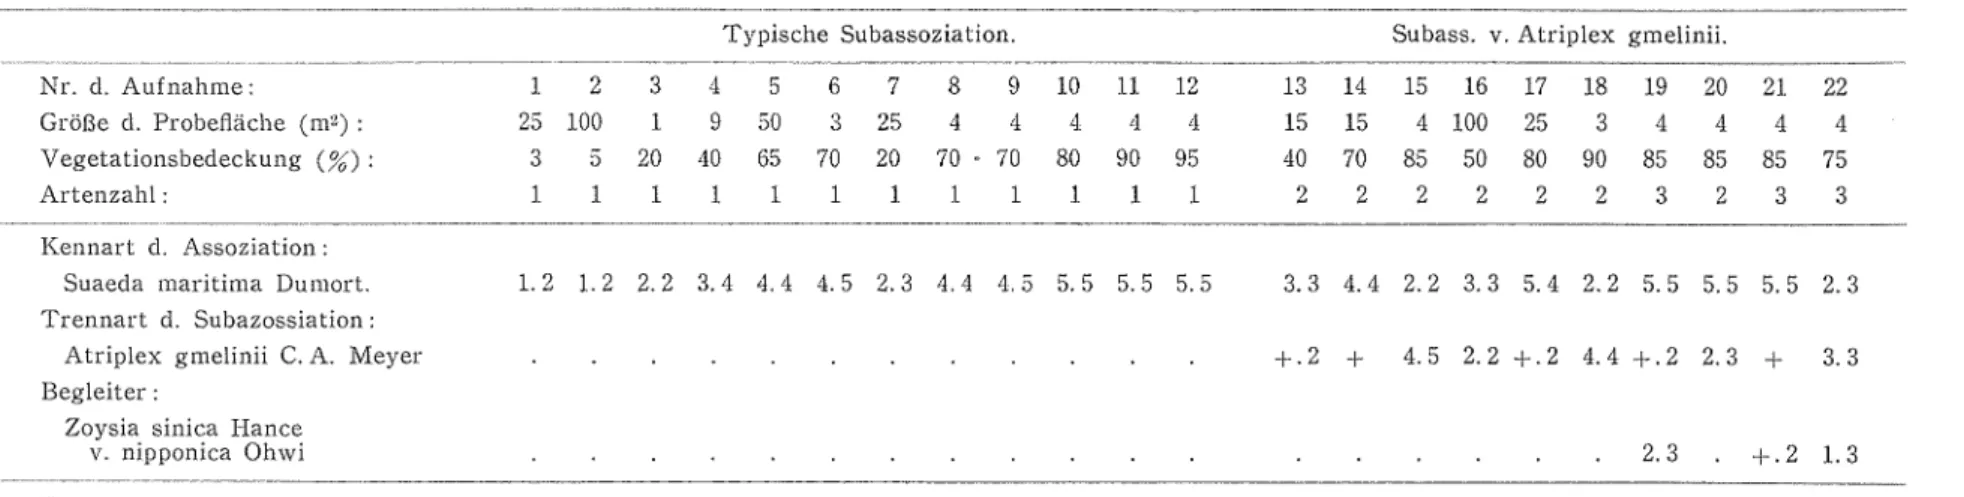 Tabelle 2. Atrip1ici‑Suaedetum mar1t1ma e, Typische Subassoziation. Subass. v. Atriplex gmelinii